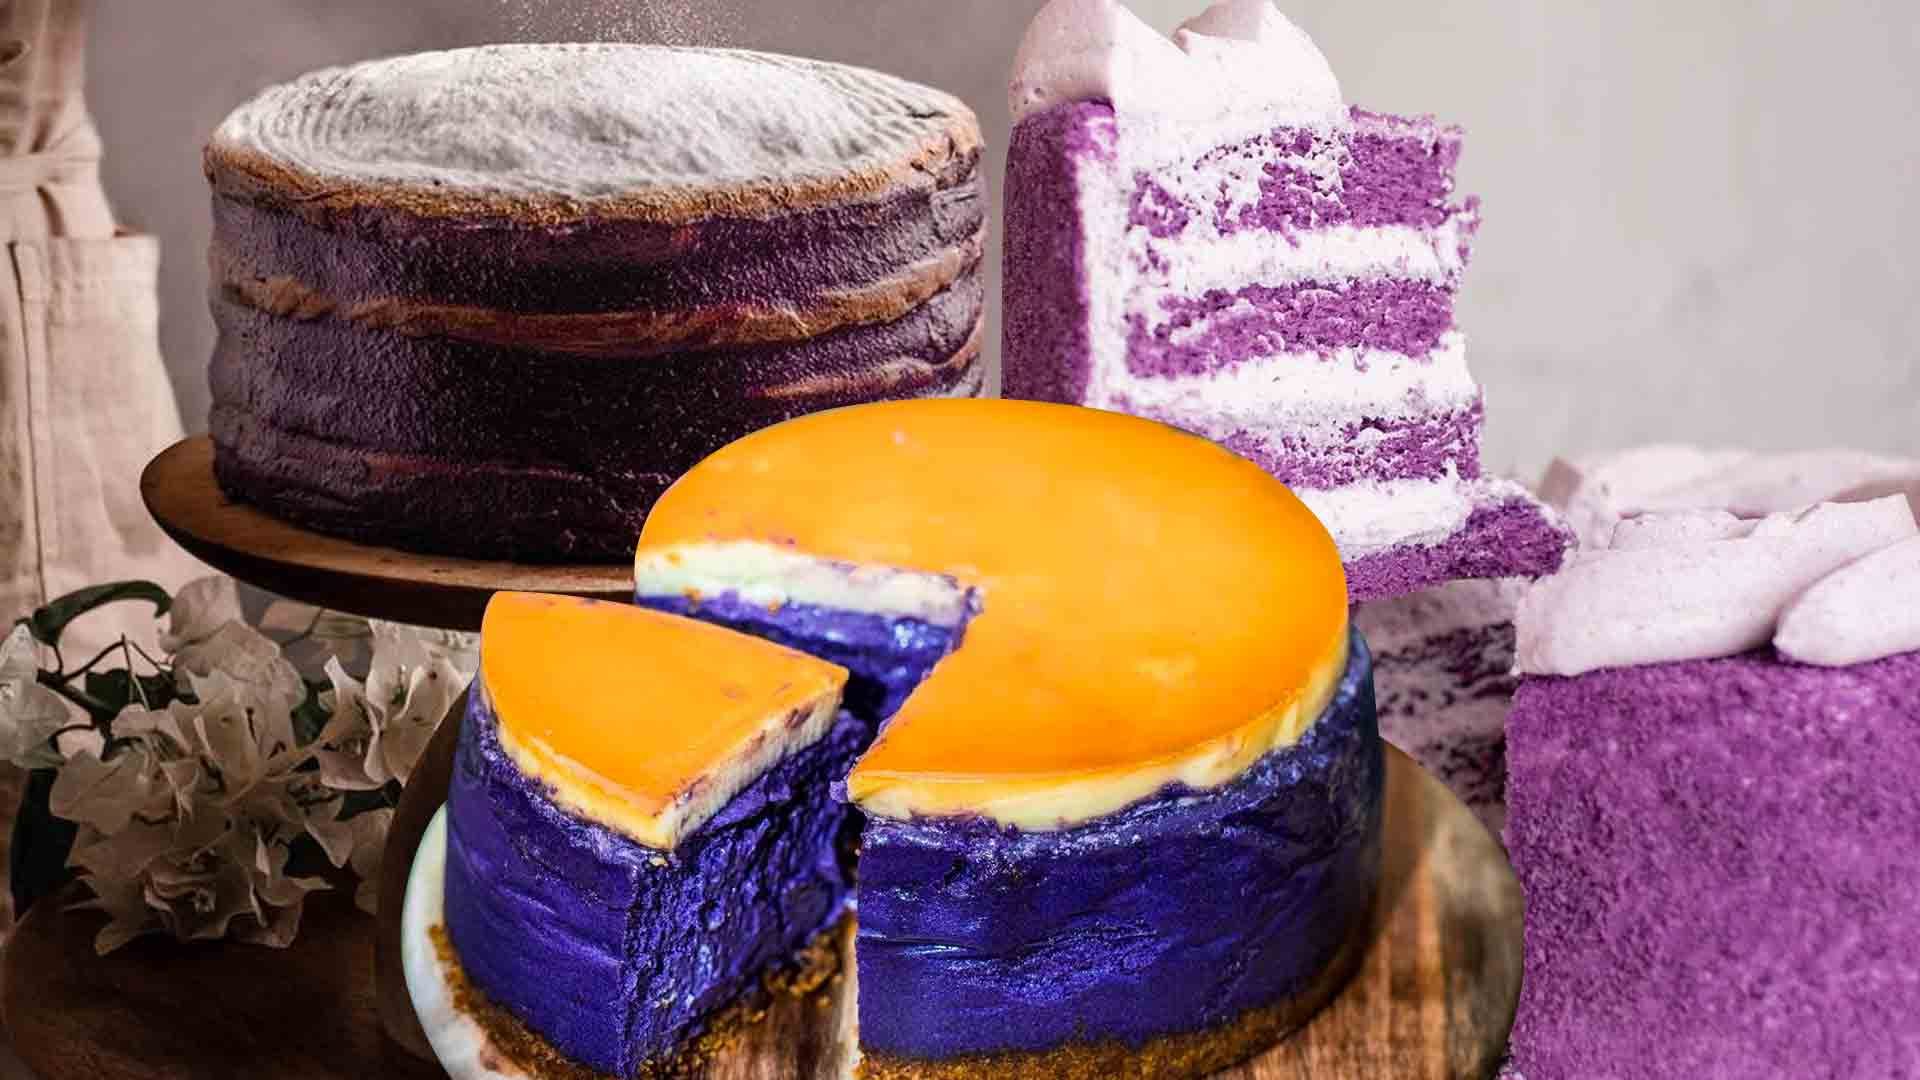 Pakain naman, Pantone! Ube desserts to celebrate Very Peri, Pantone’s 2022 Color of The Year